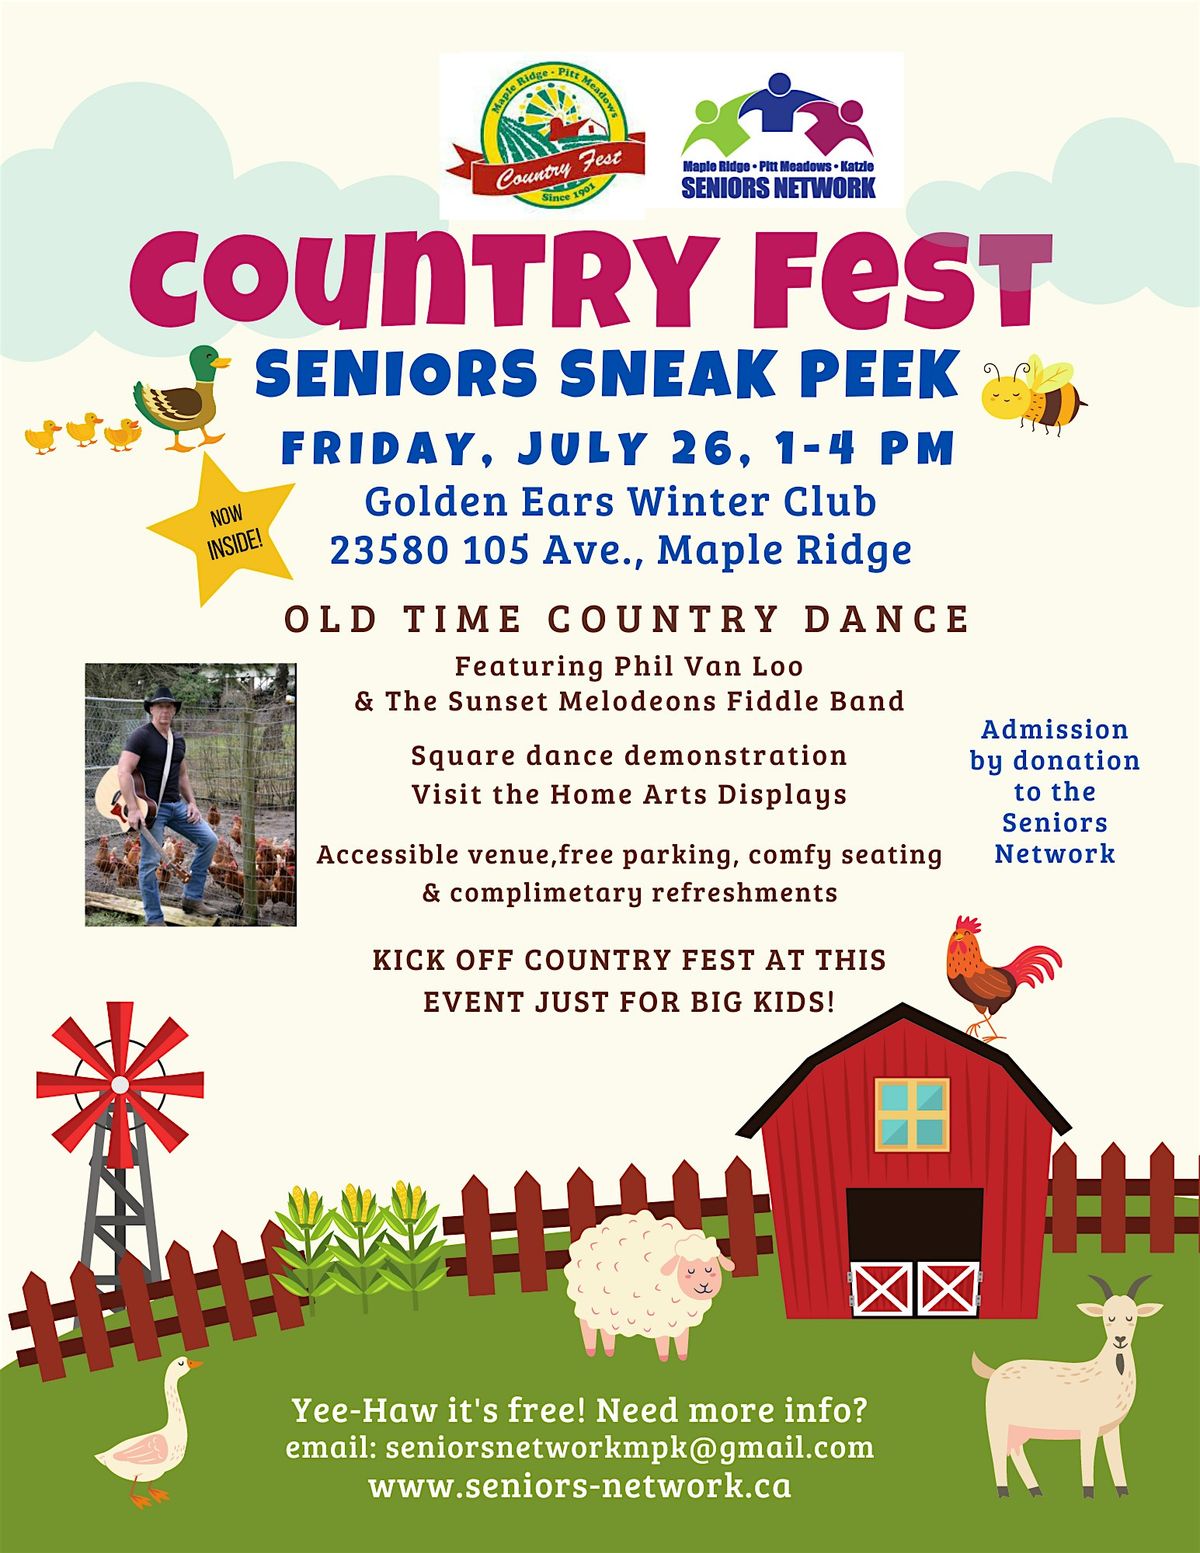 Seniors Sneak Peek at Country Fest